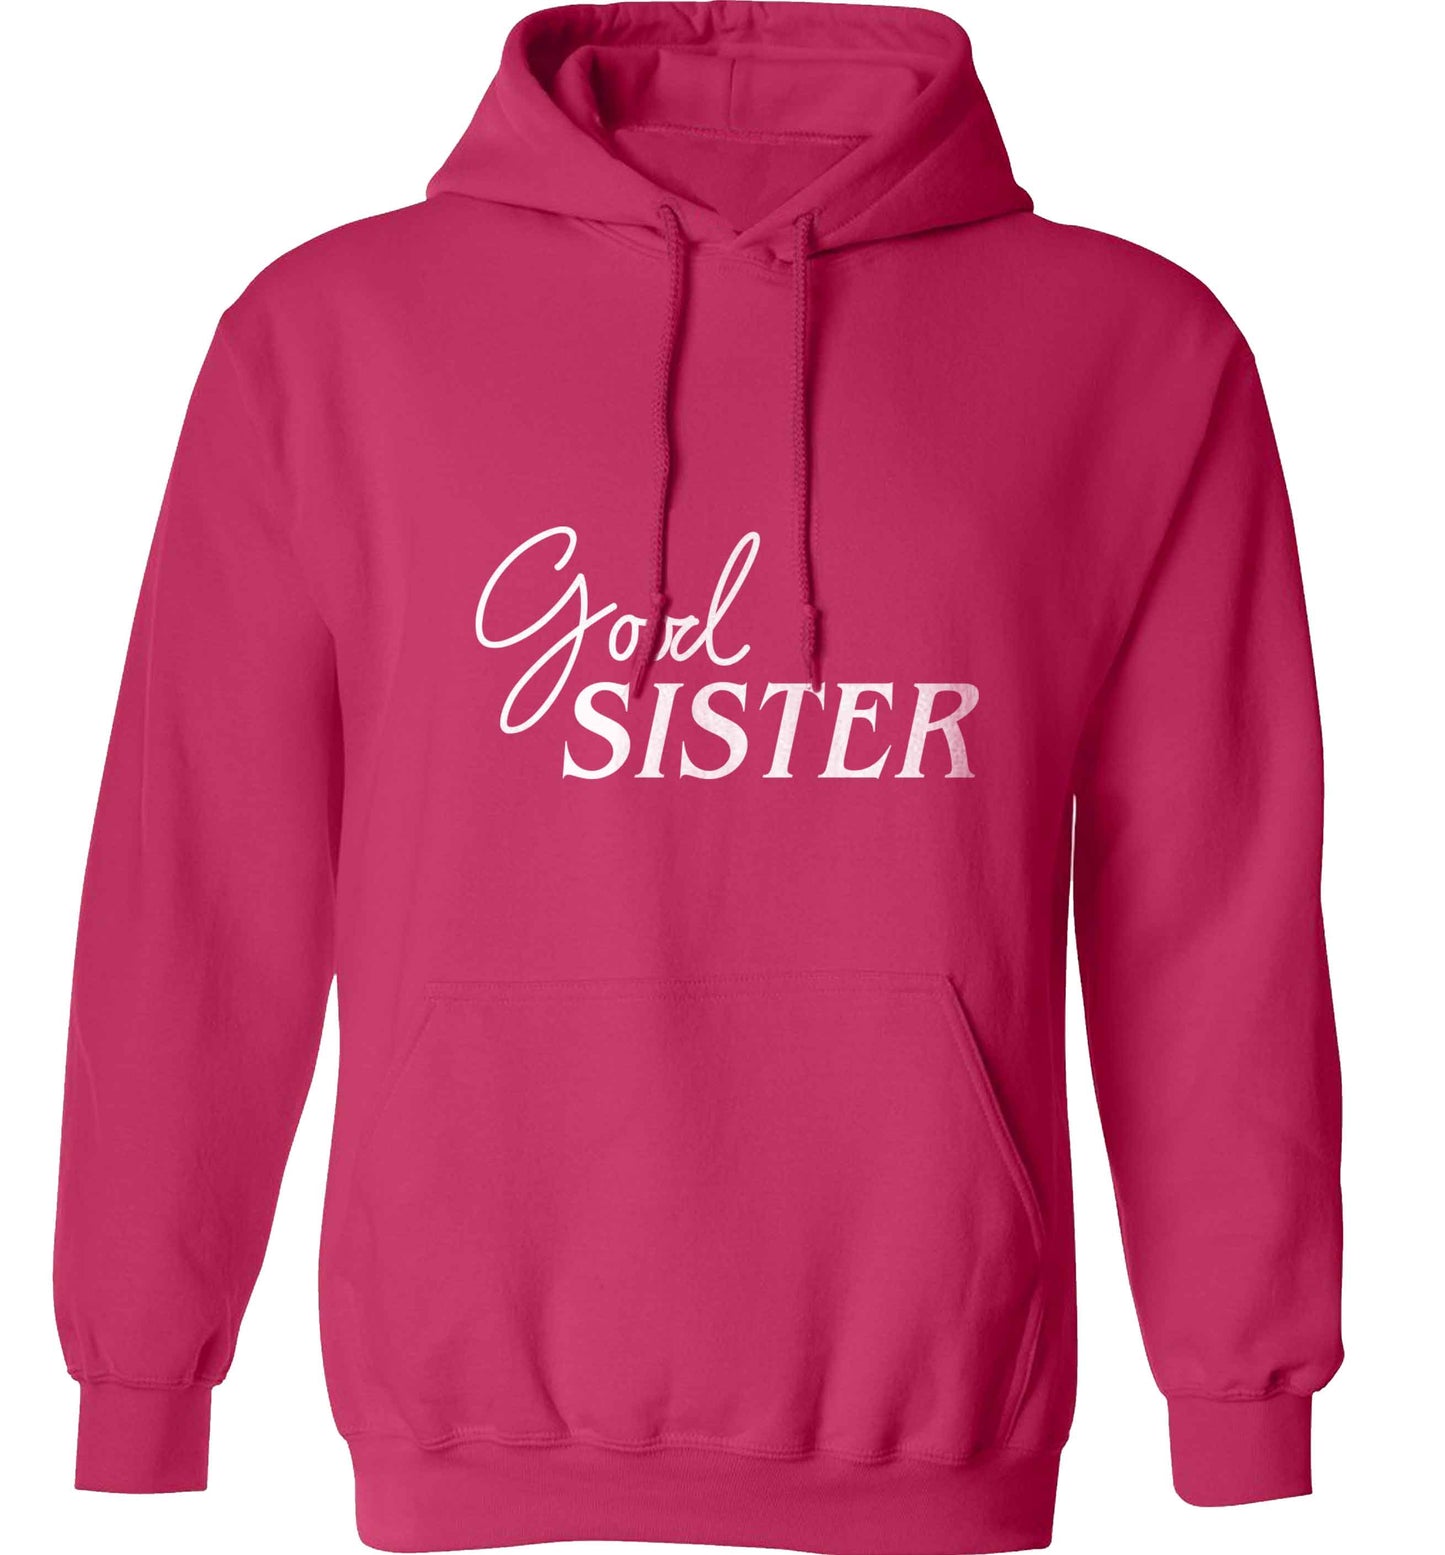 Good sister adults unisex pink hoodie 2XL